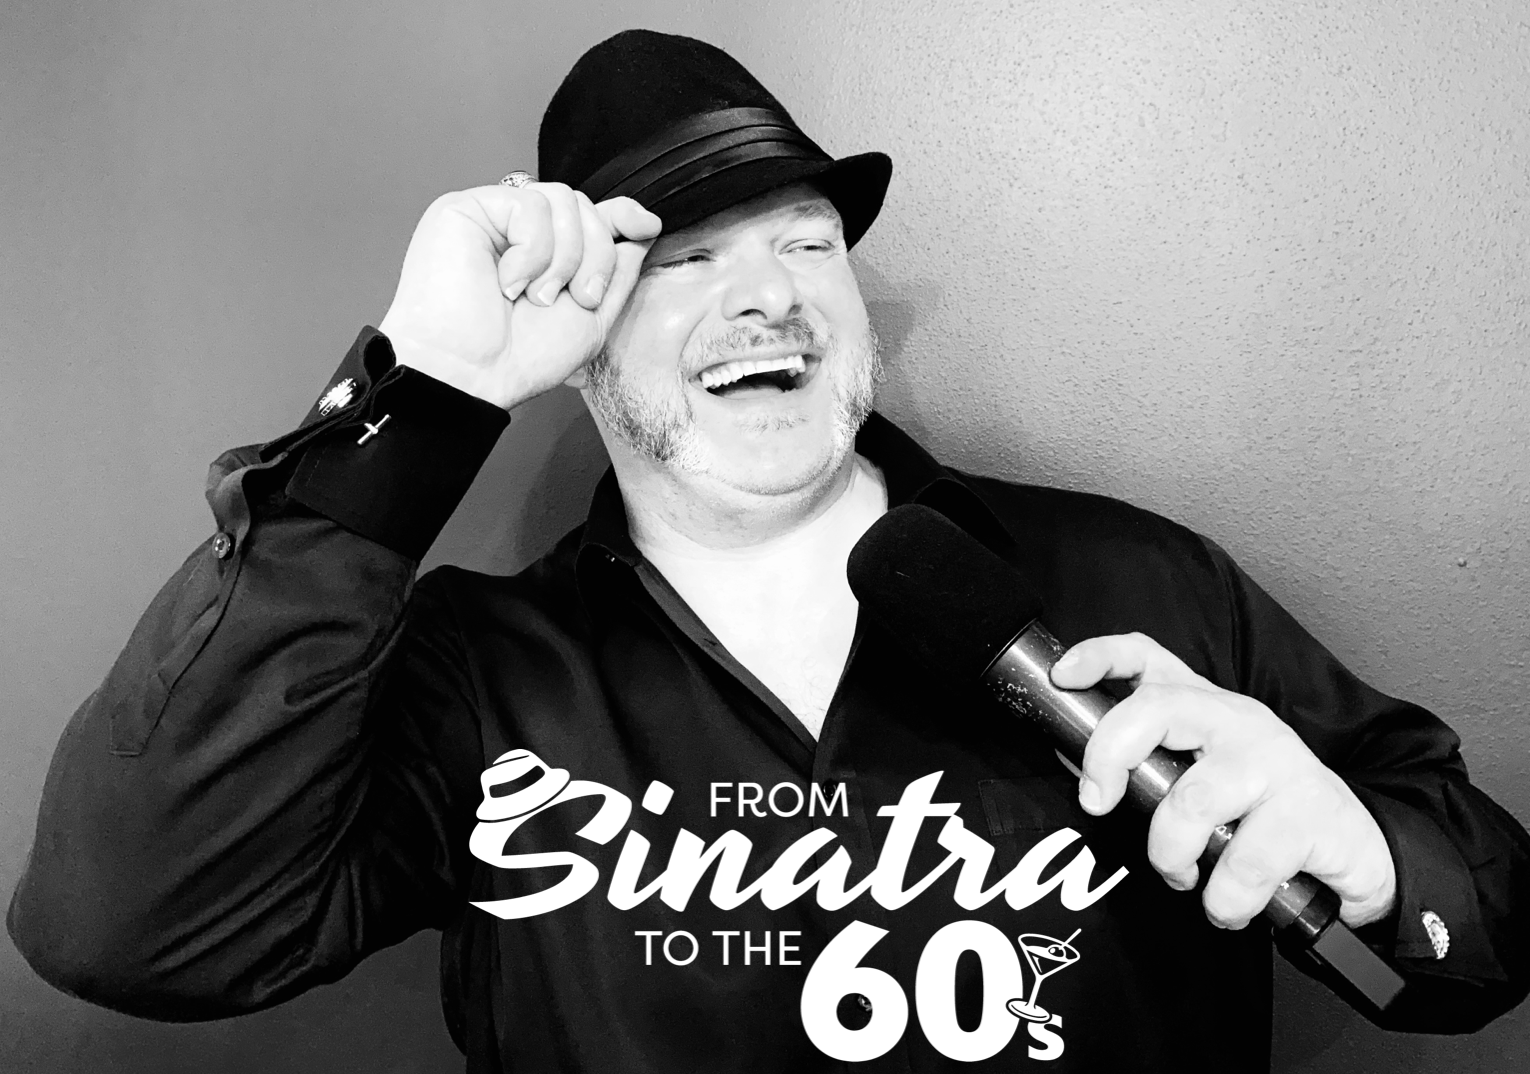 Josh from Sinatra to the 60s_Sunburst